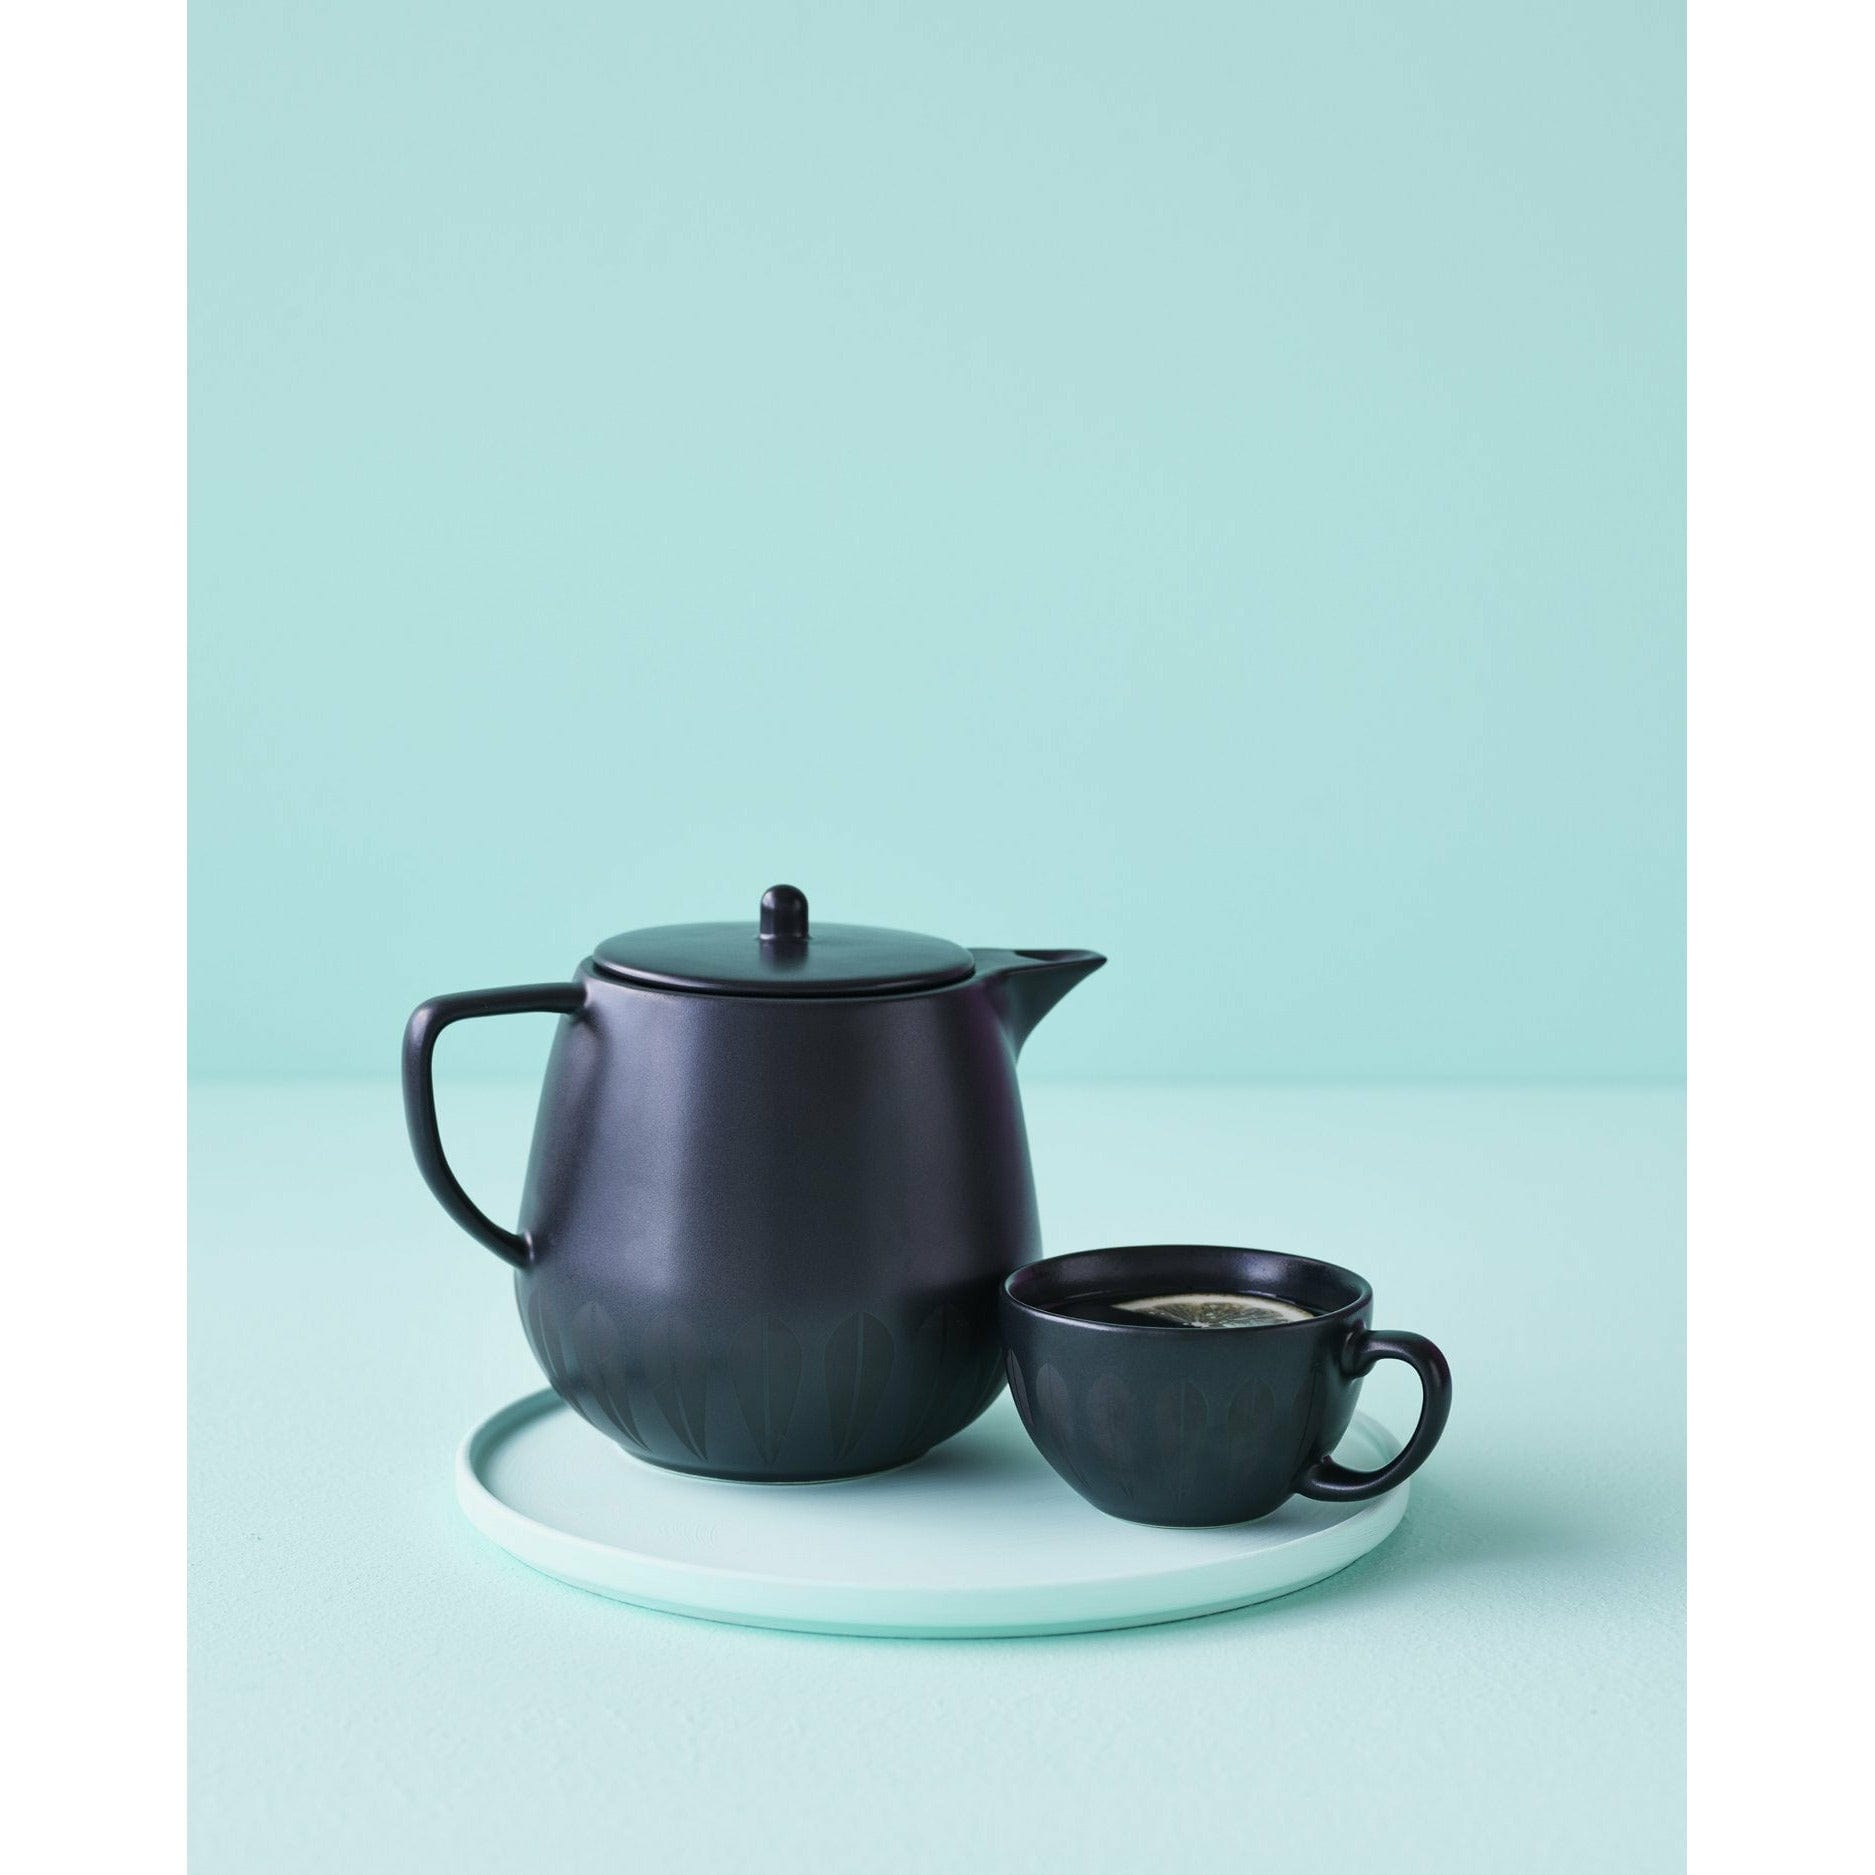 Lucie Kaas Arne Clausen Lotus Teapot, czarny